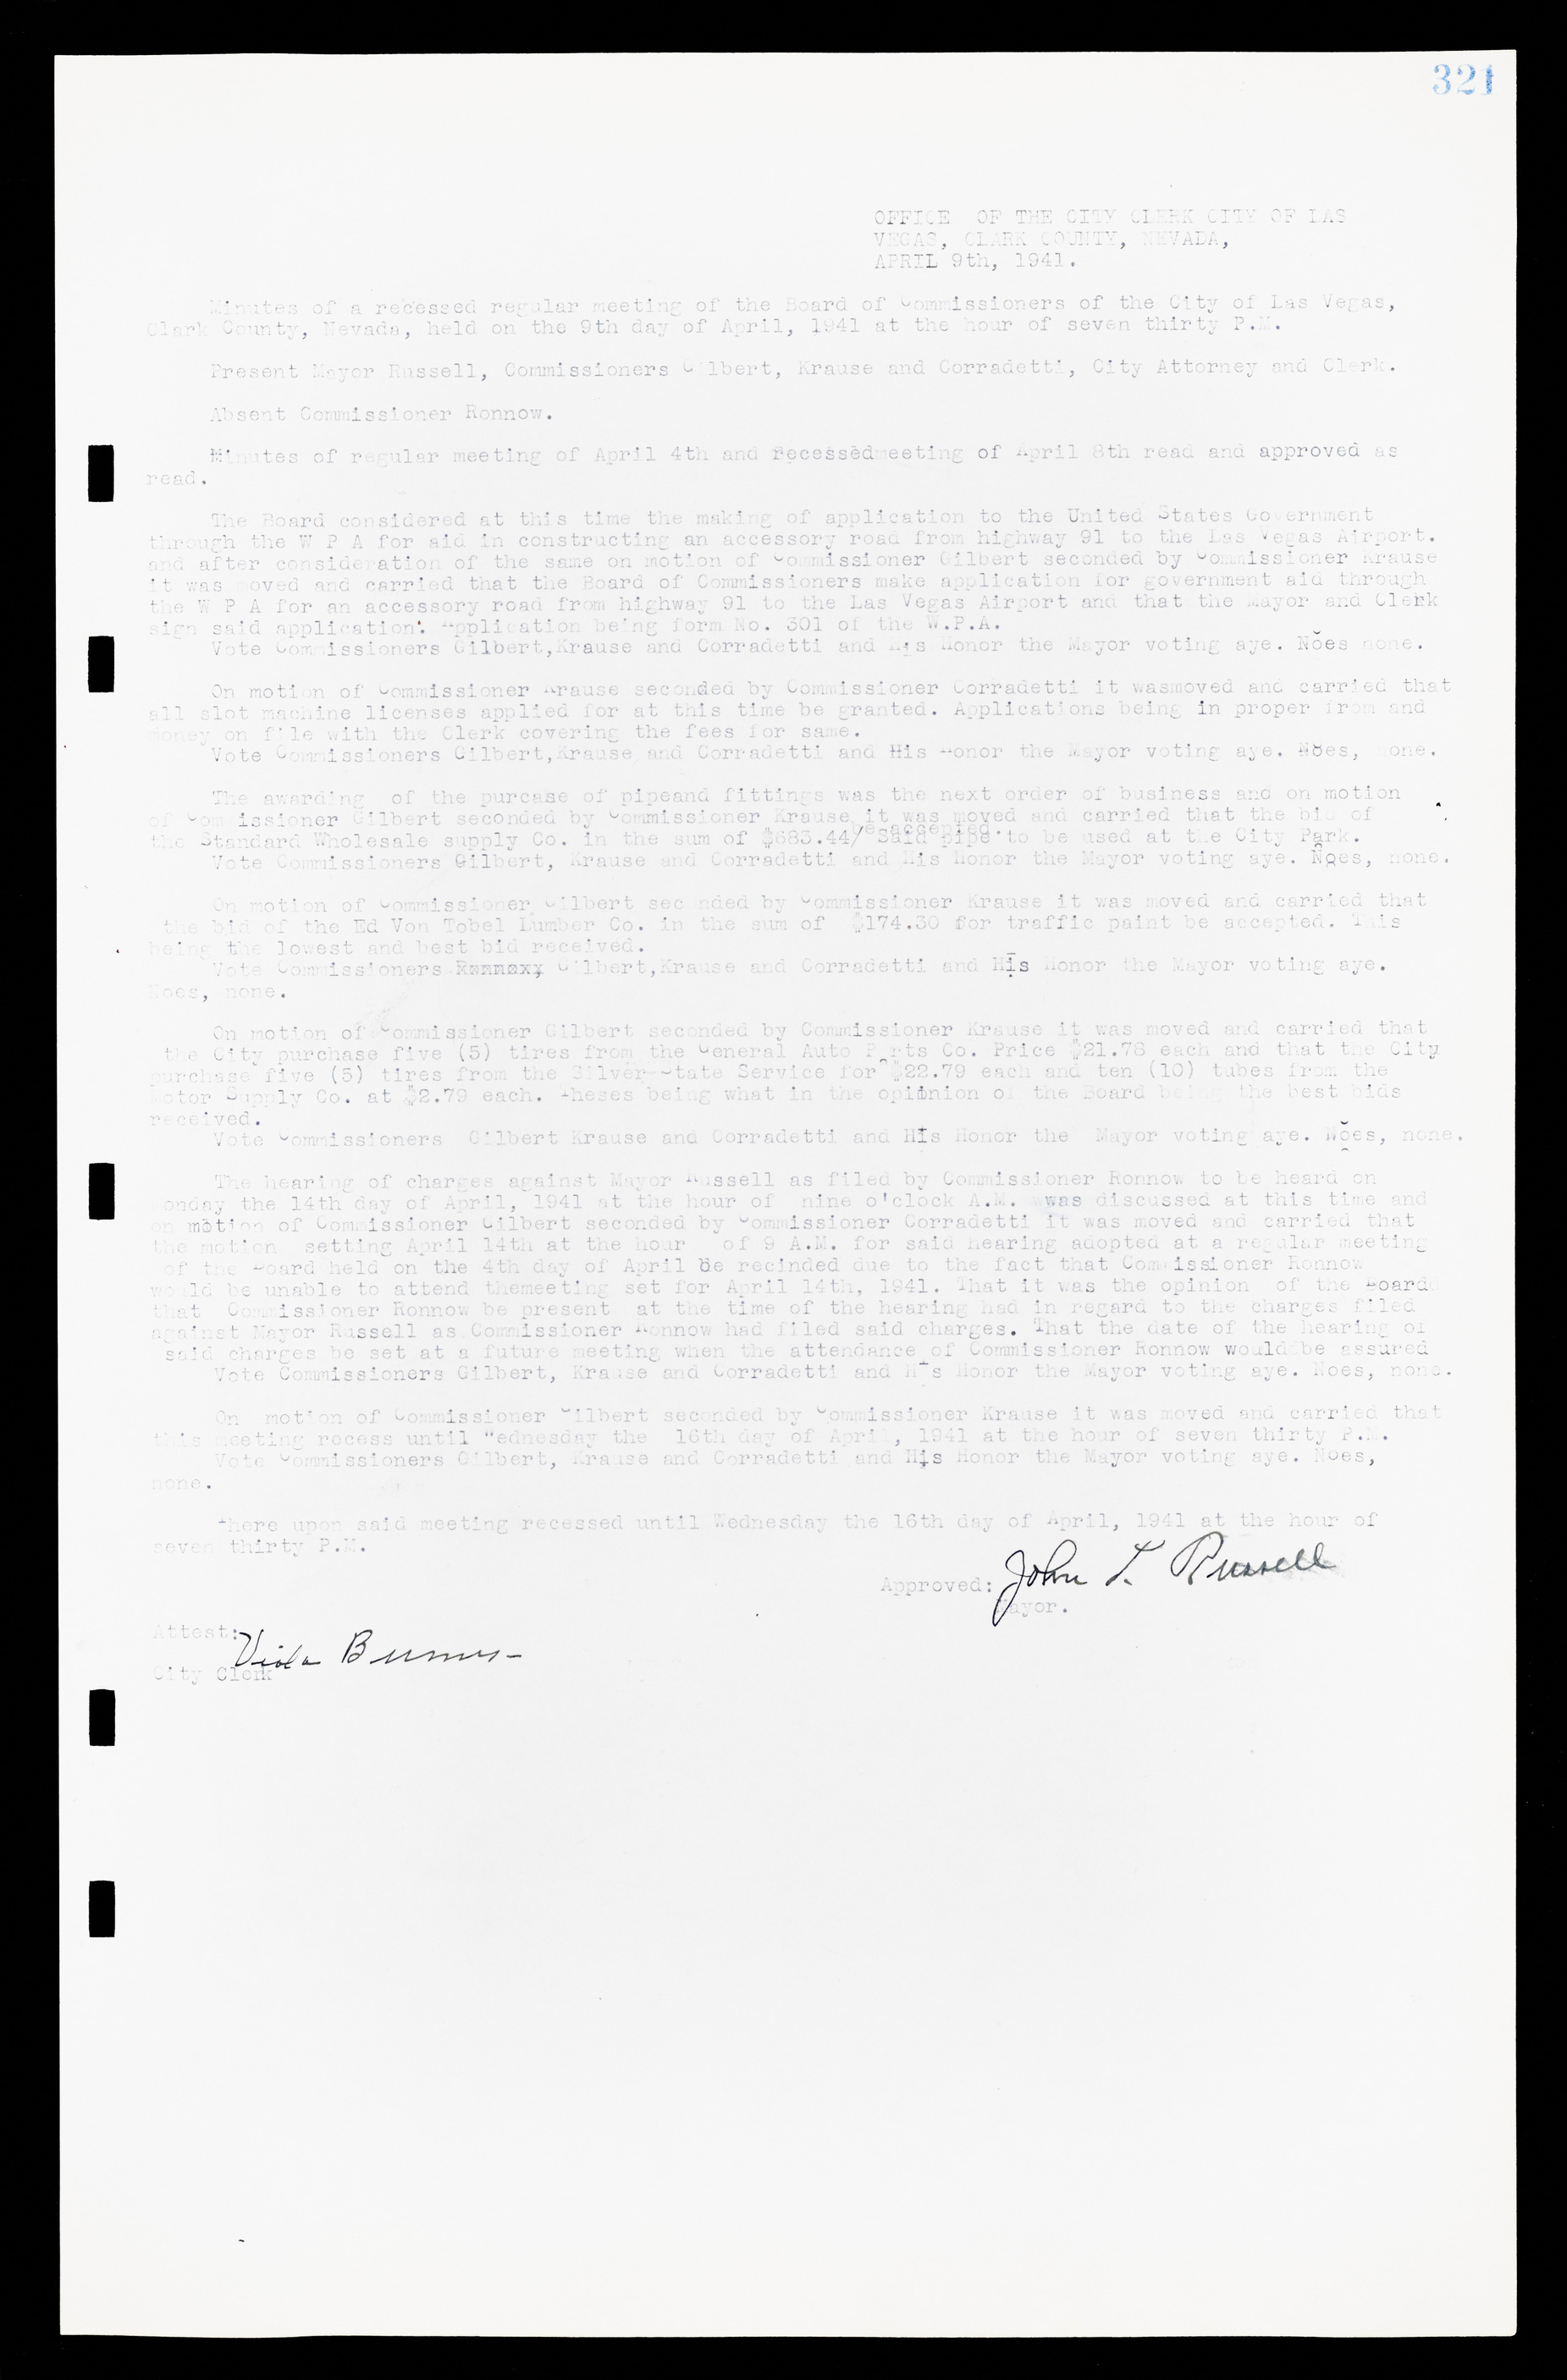 Las Vegas City Commission Minutes, February 17, 1937 to August 4, 1942, lvc000004-345